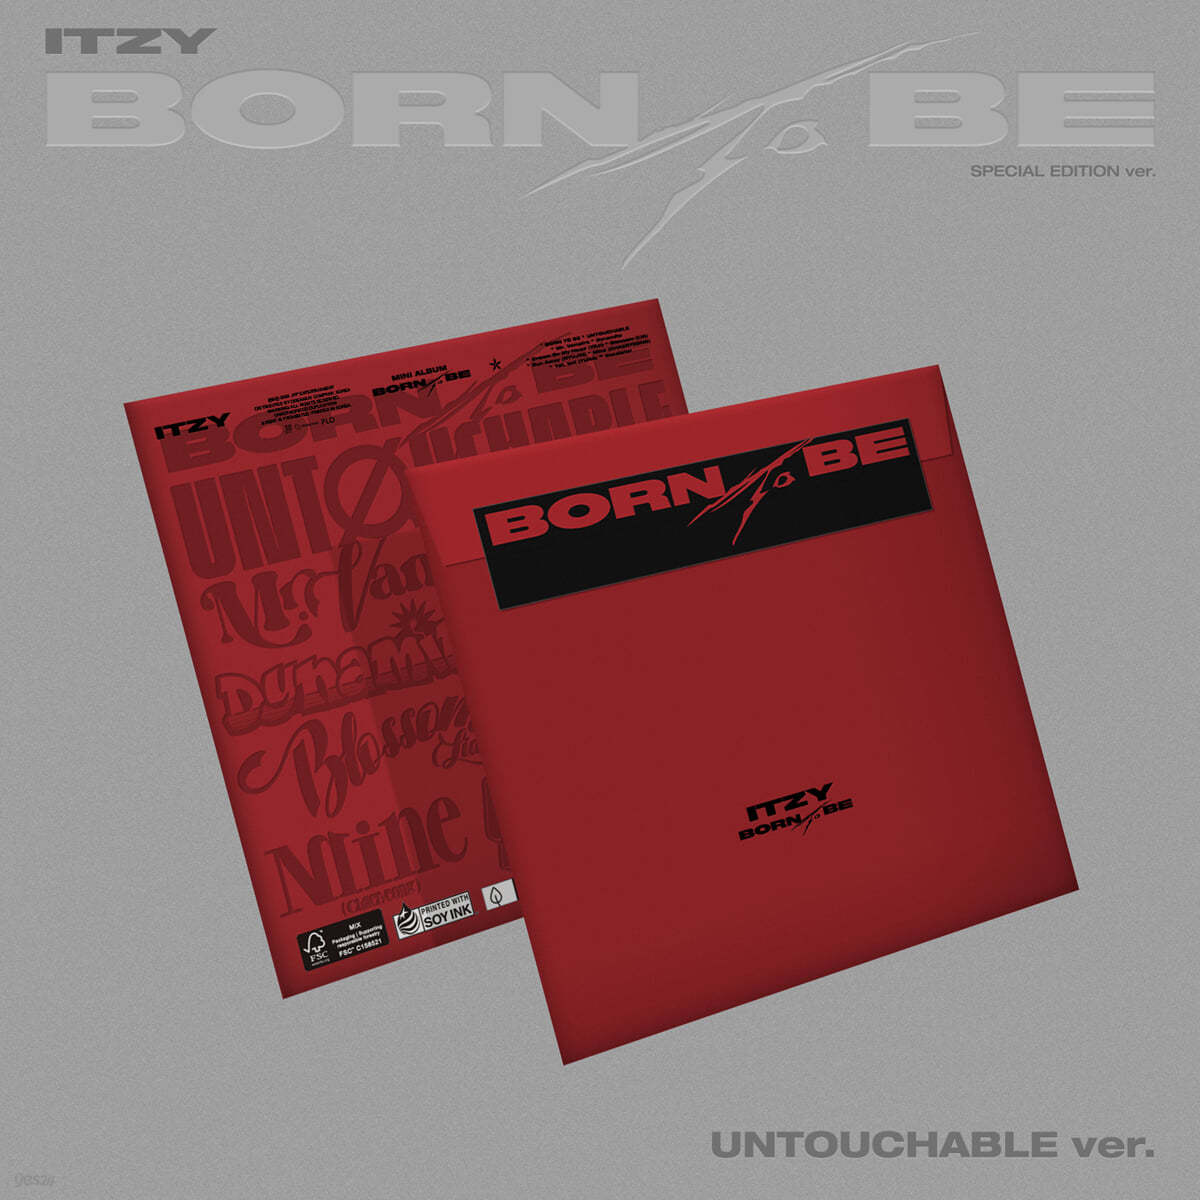 ITZY – Born To Be (Special Edition) (Untouchable Ver.)